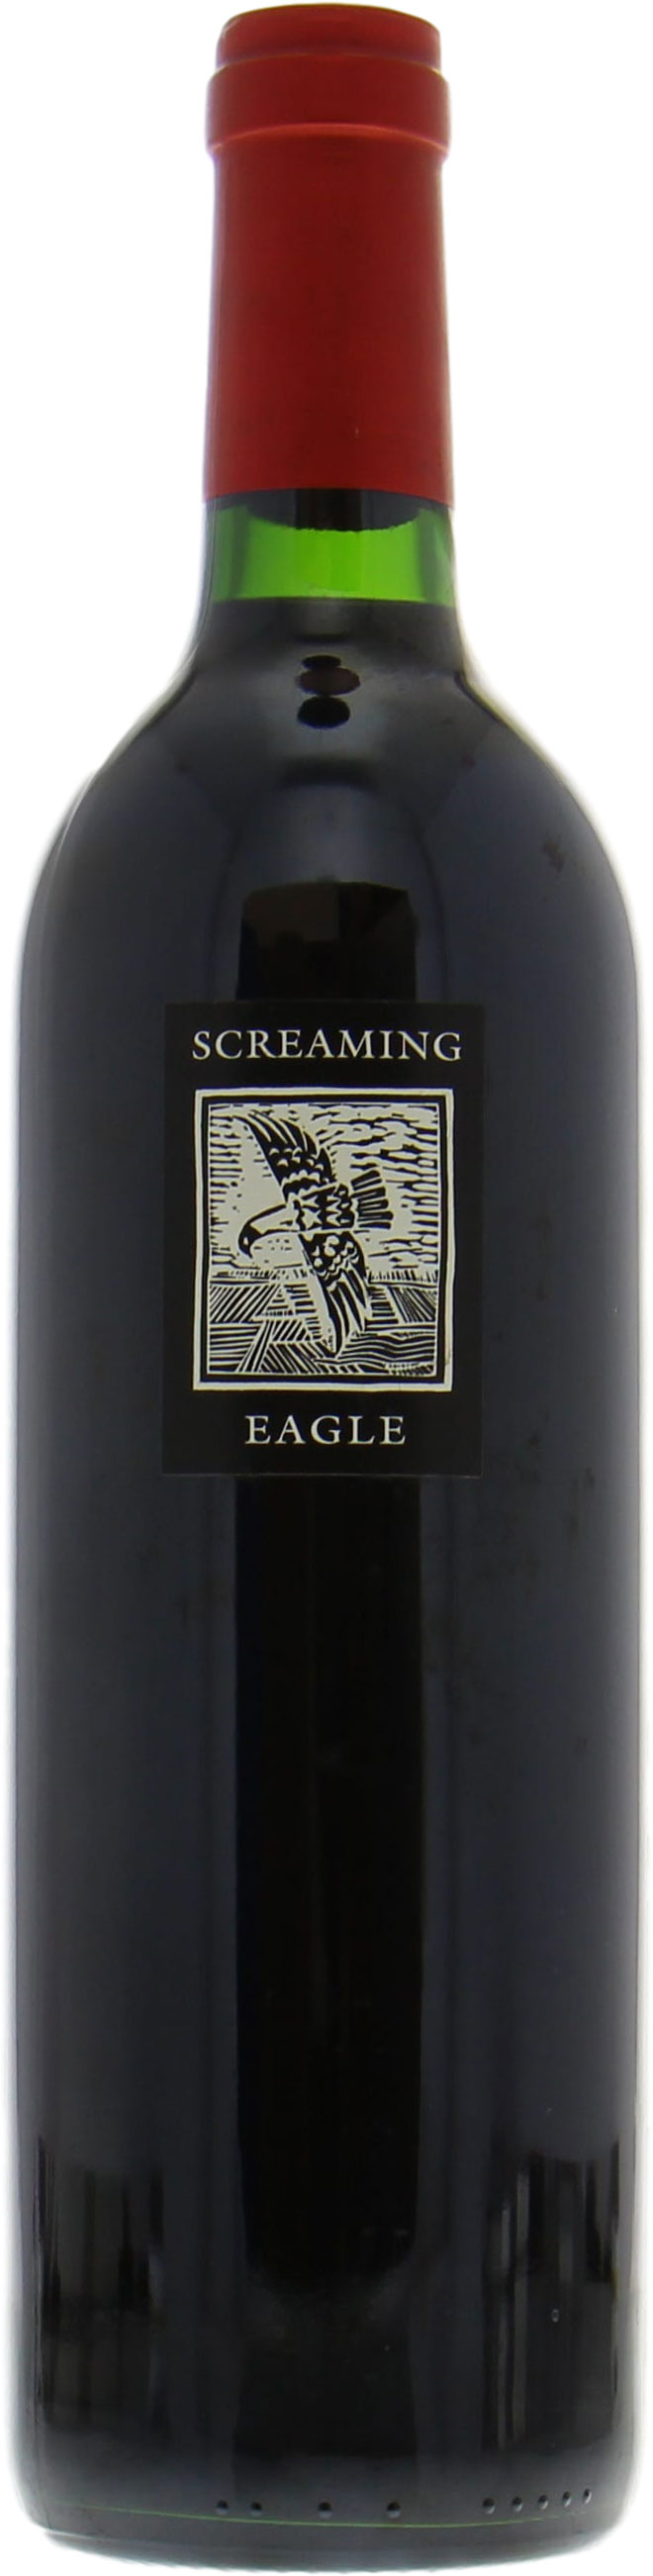 Screaming Eagle - Cabernet Sauvignon 2001 From Original Wooden Case